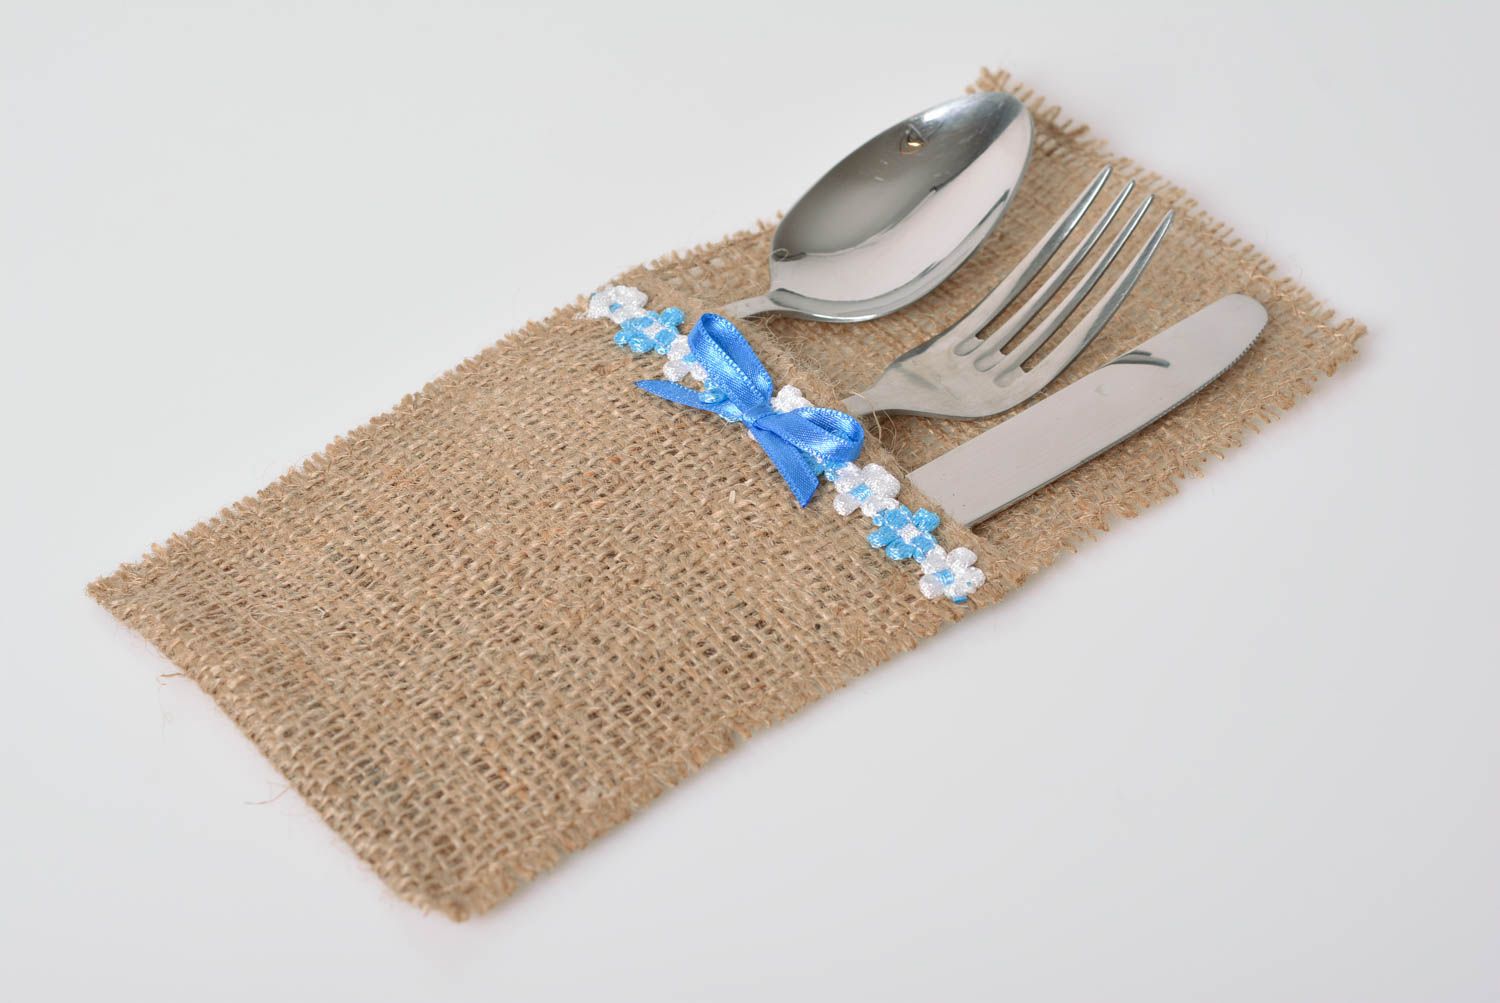 Fabric organizer cutlery made of burlap with ribbon handmade kitchen decor ideas photo 1